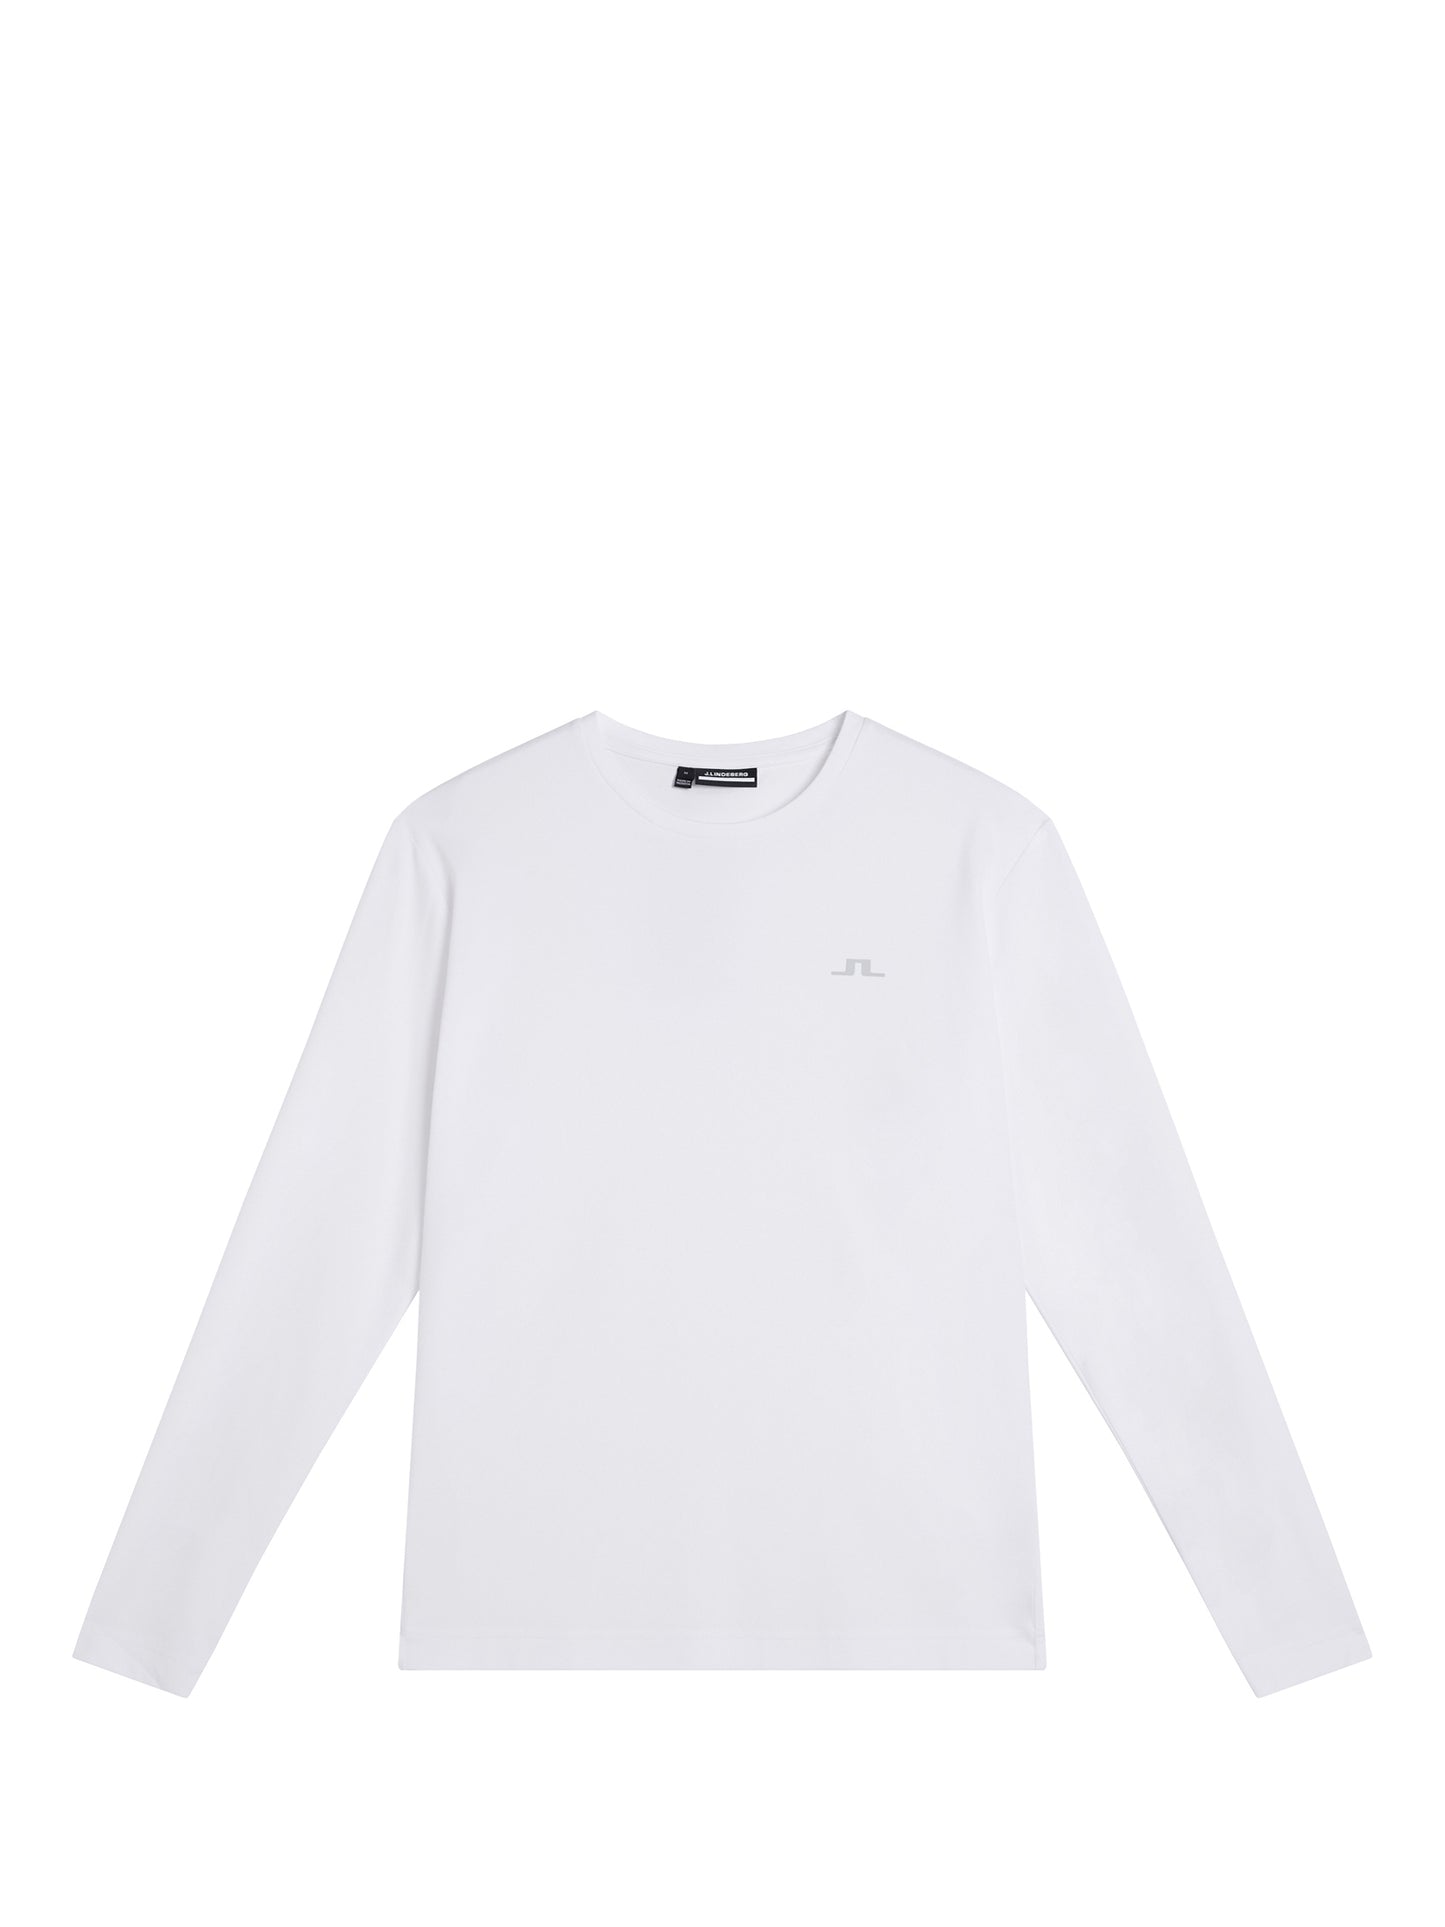 Ade T-shirt LS / White – J.Lindeberg